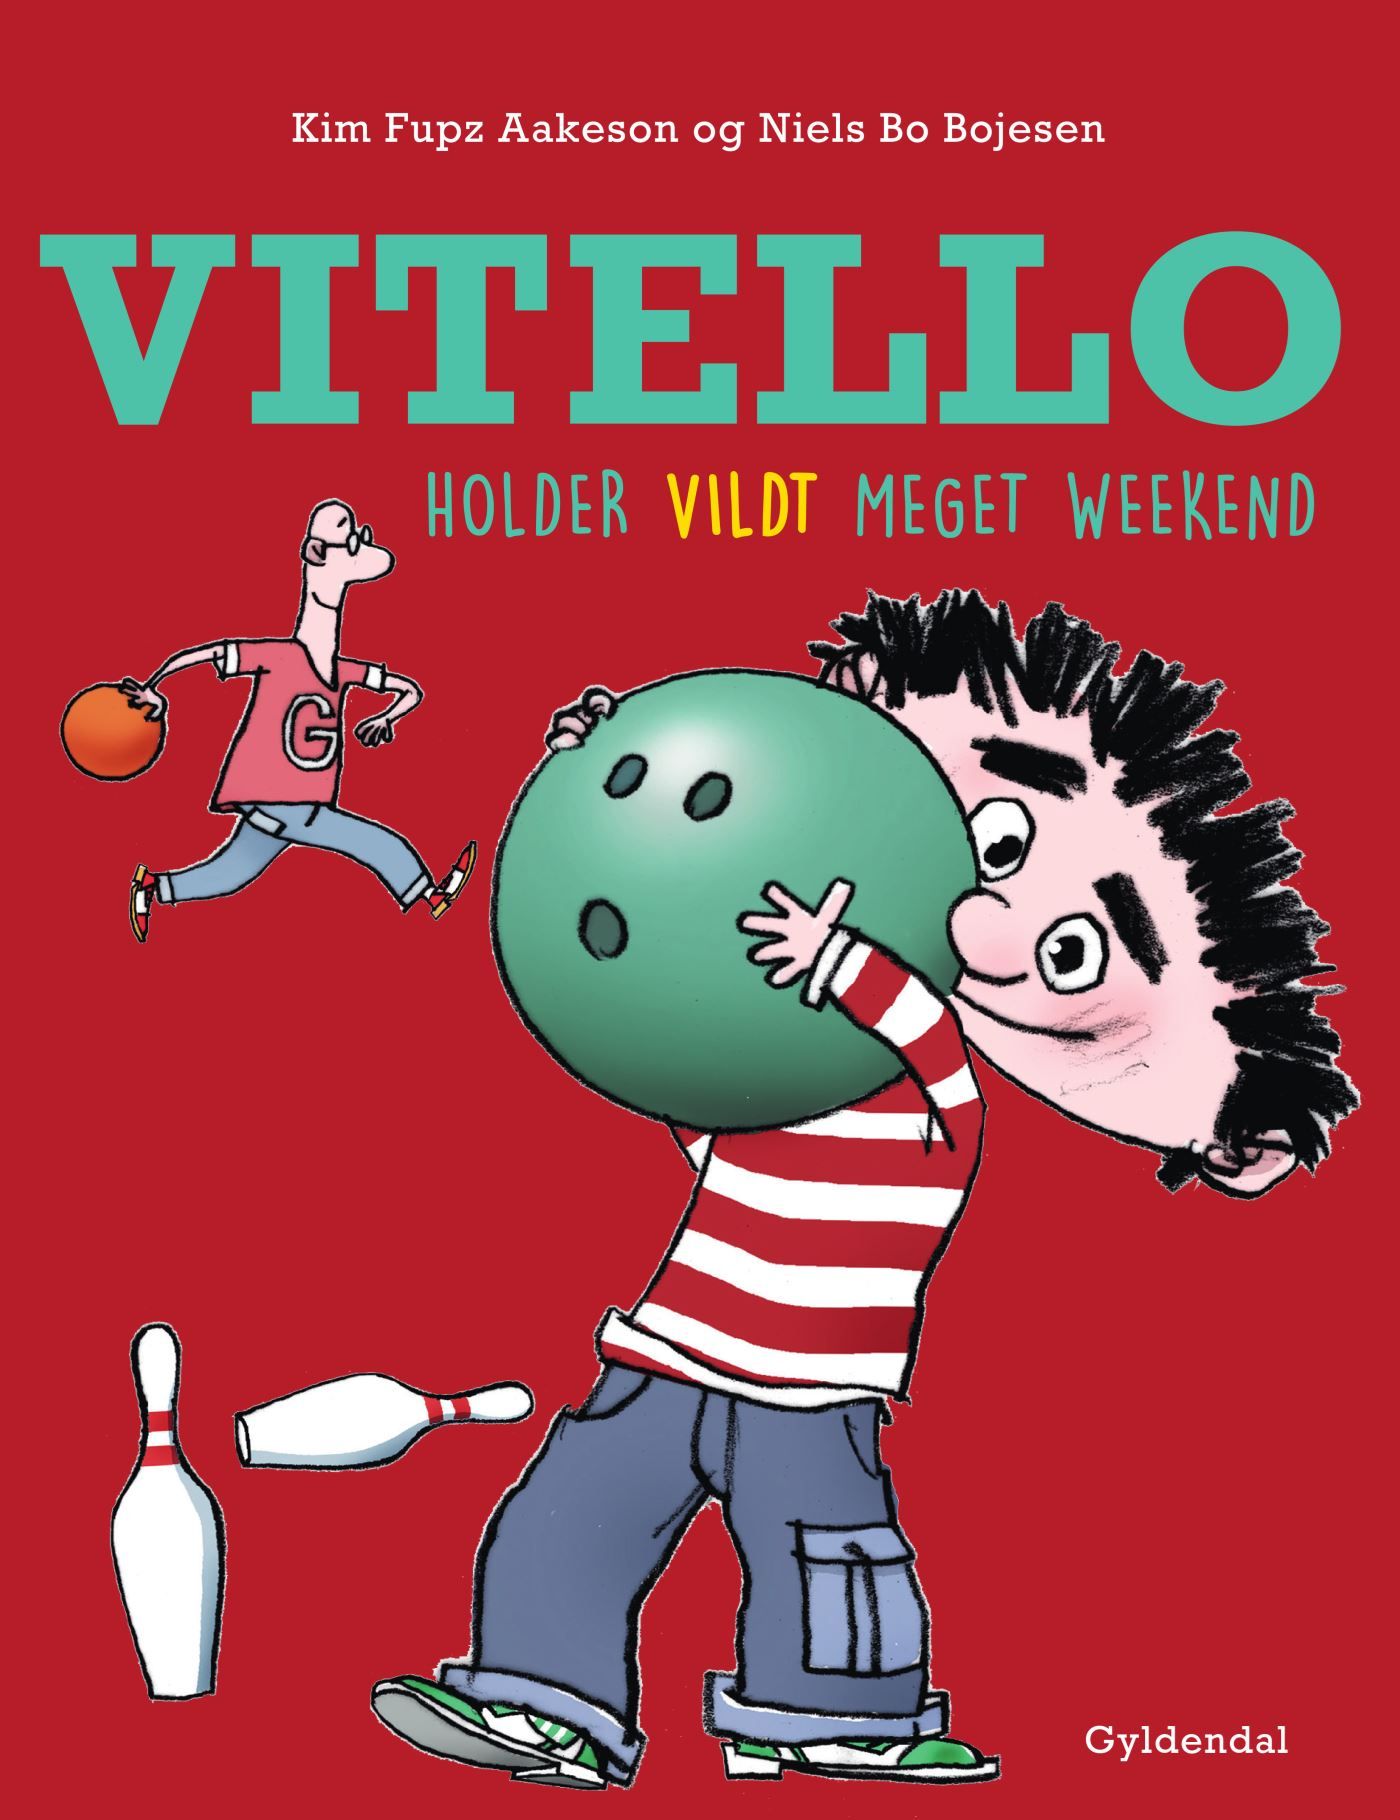 Vitello holder vildt meget weekend, audiobook by Niels Bo Bojesen, Kim Fupz Aakeson